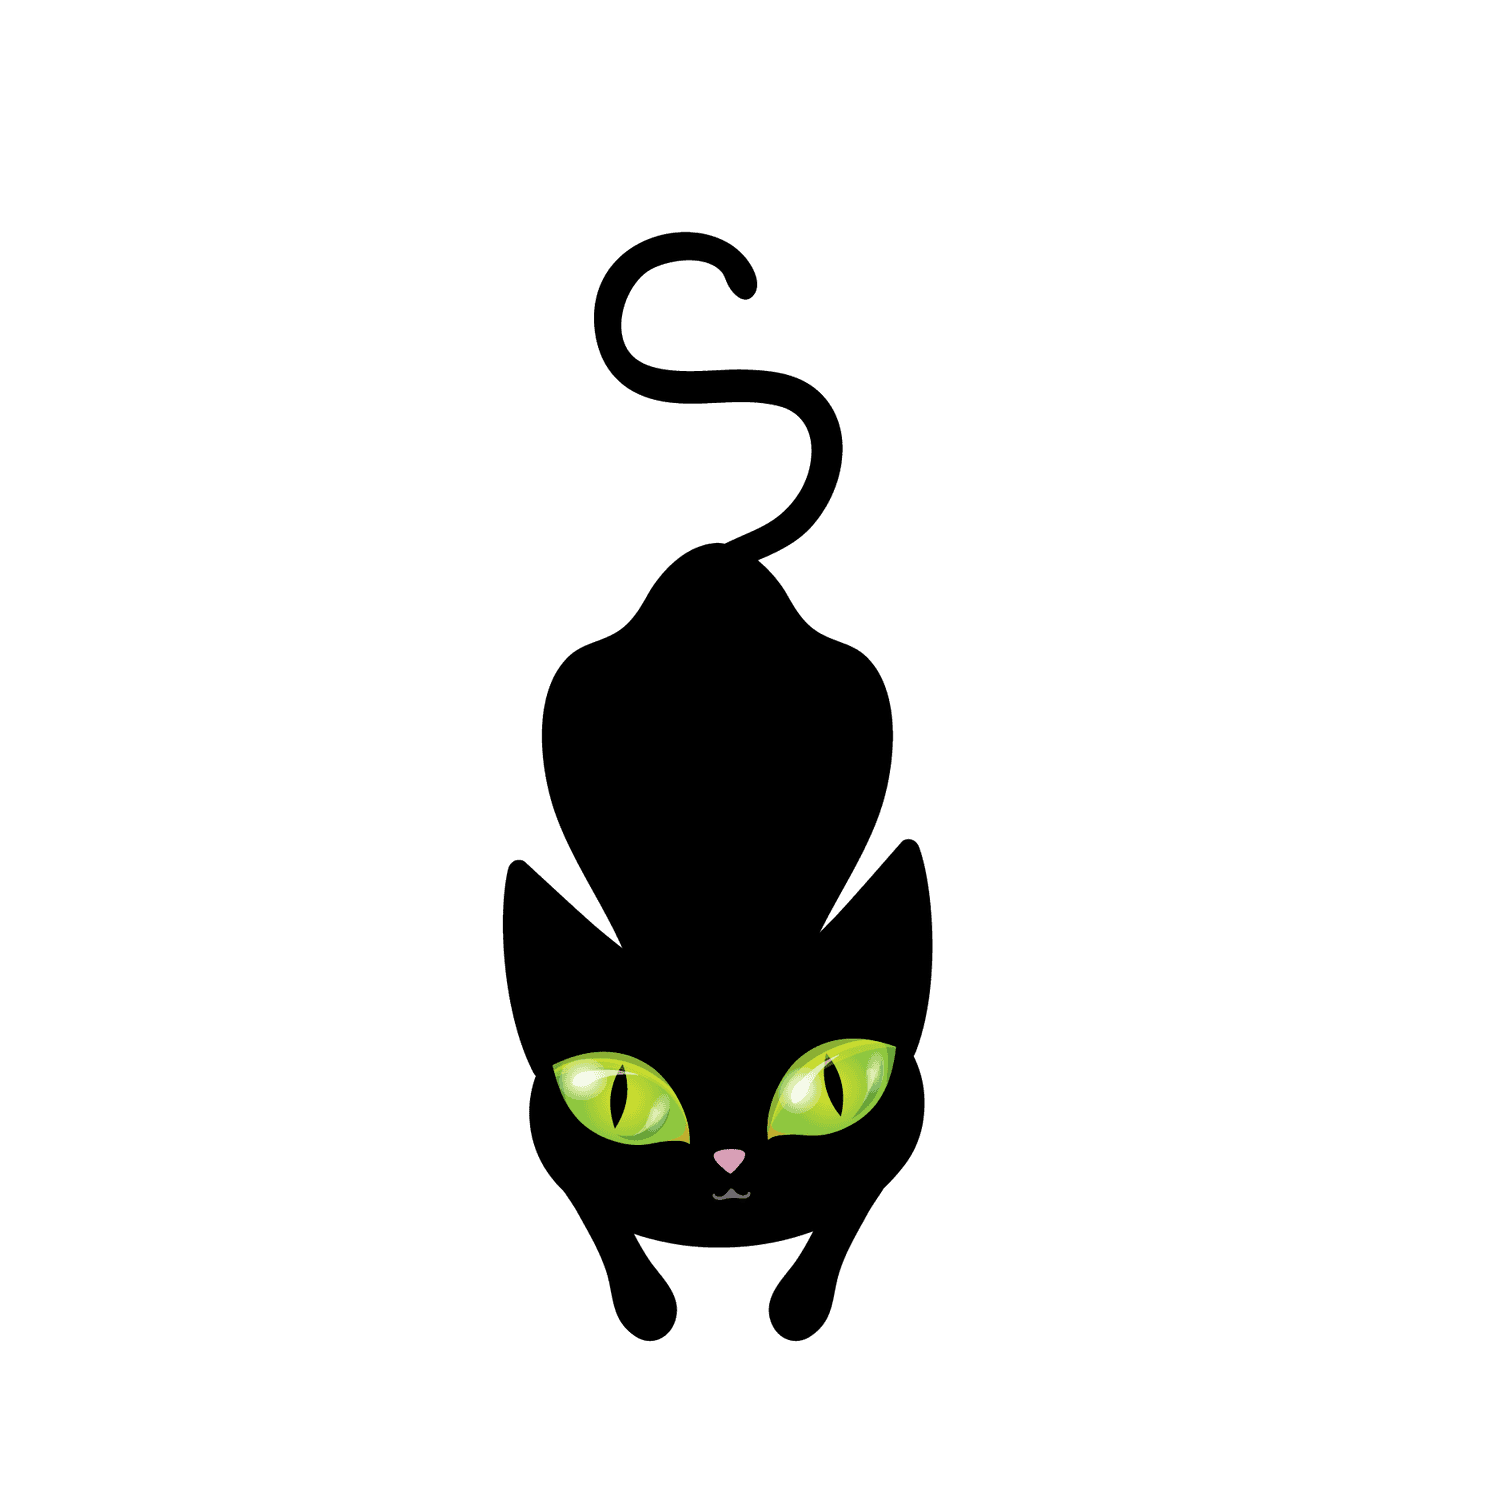 black cat with green eyes illustration